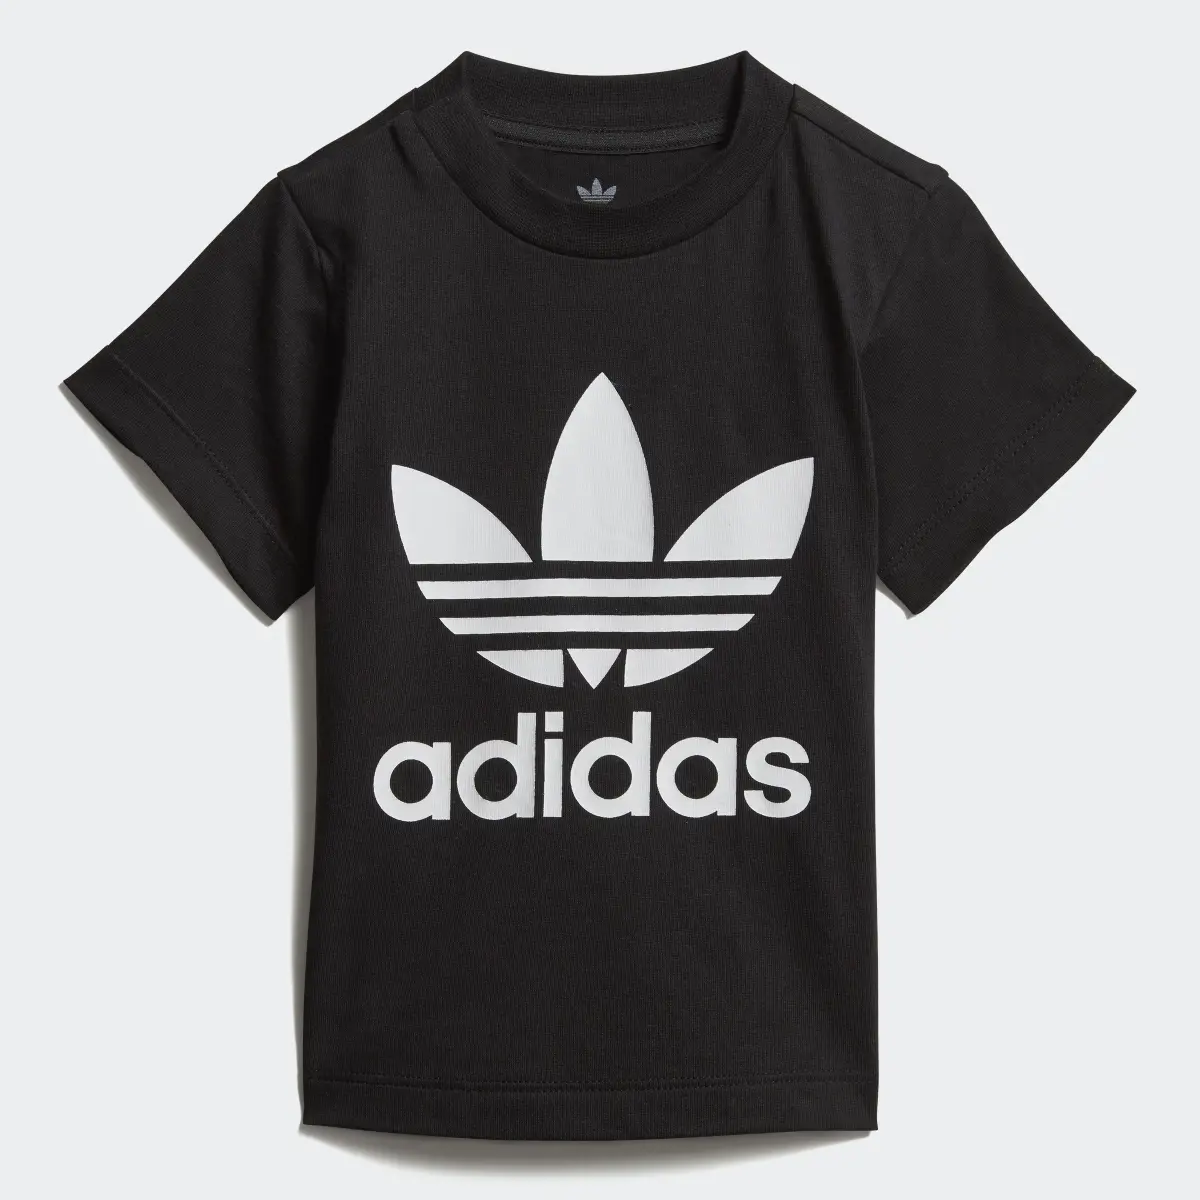 Adidas T-shirt Trefoil. 2